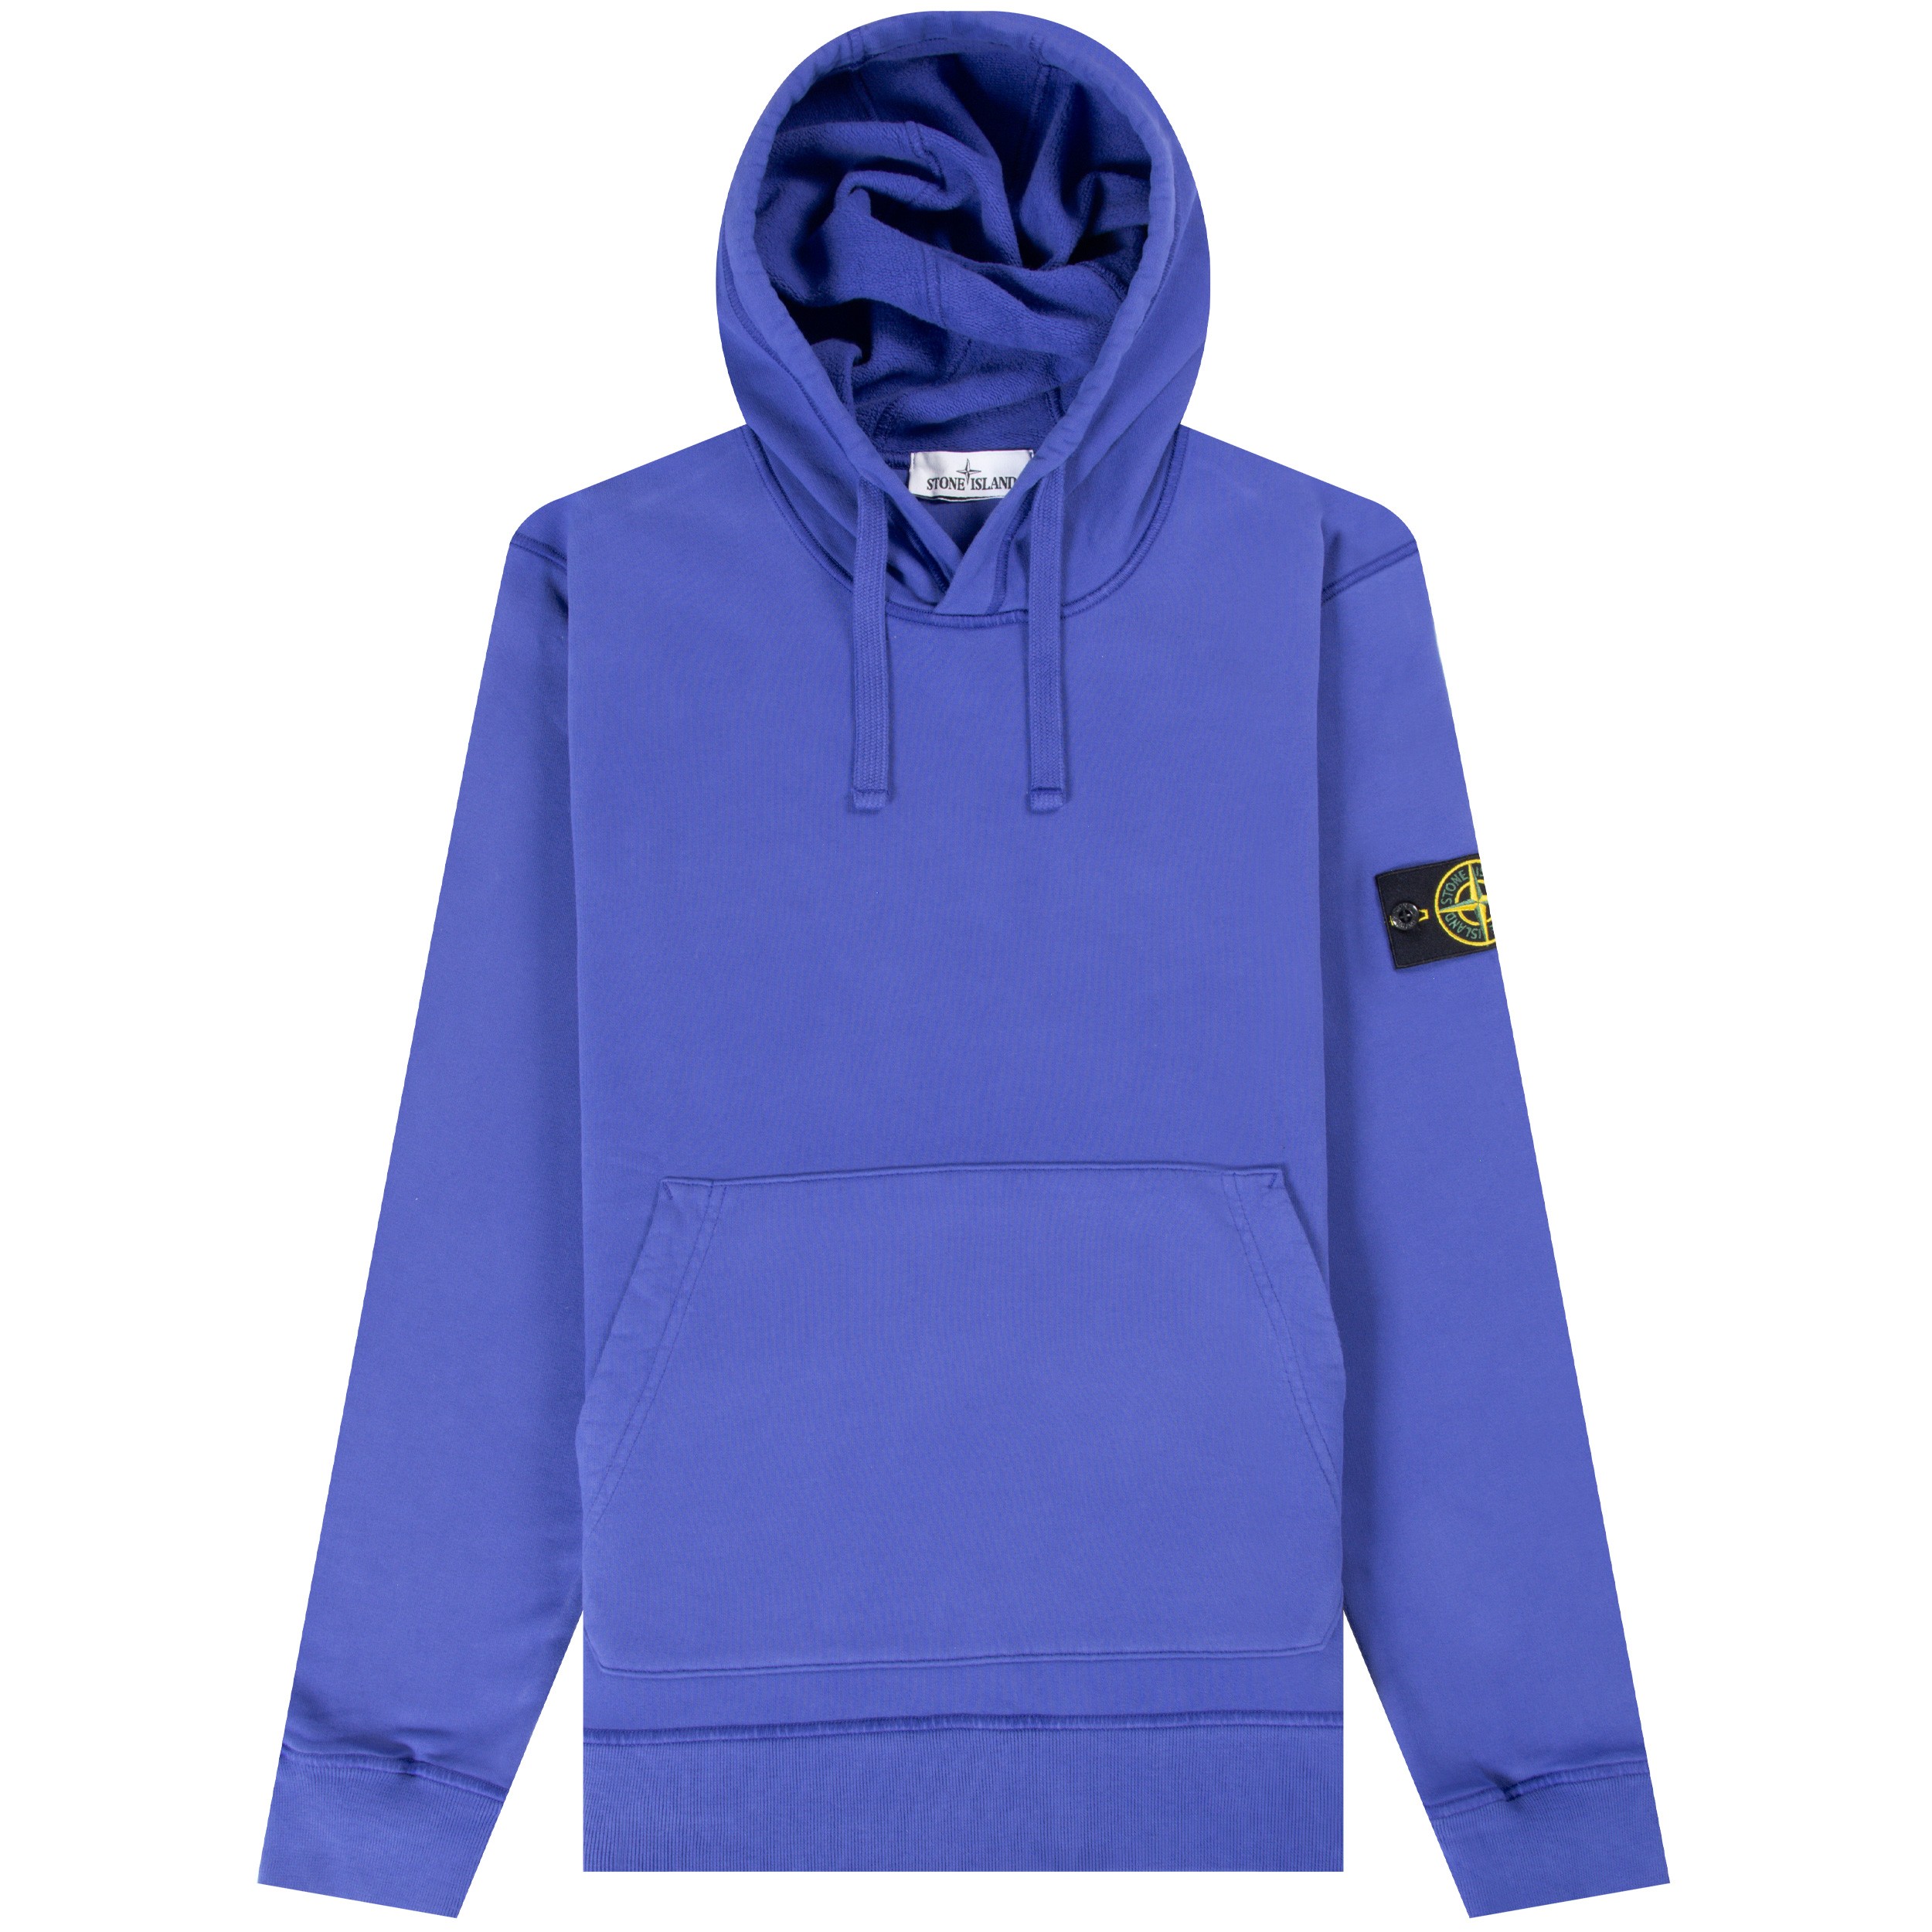 Stone Island 'Garment Dyed' Popover Hooded Sweatshirt Bright Blue